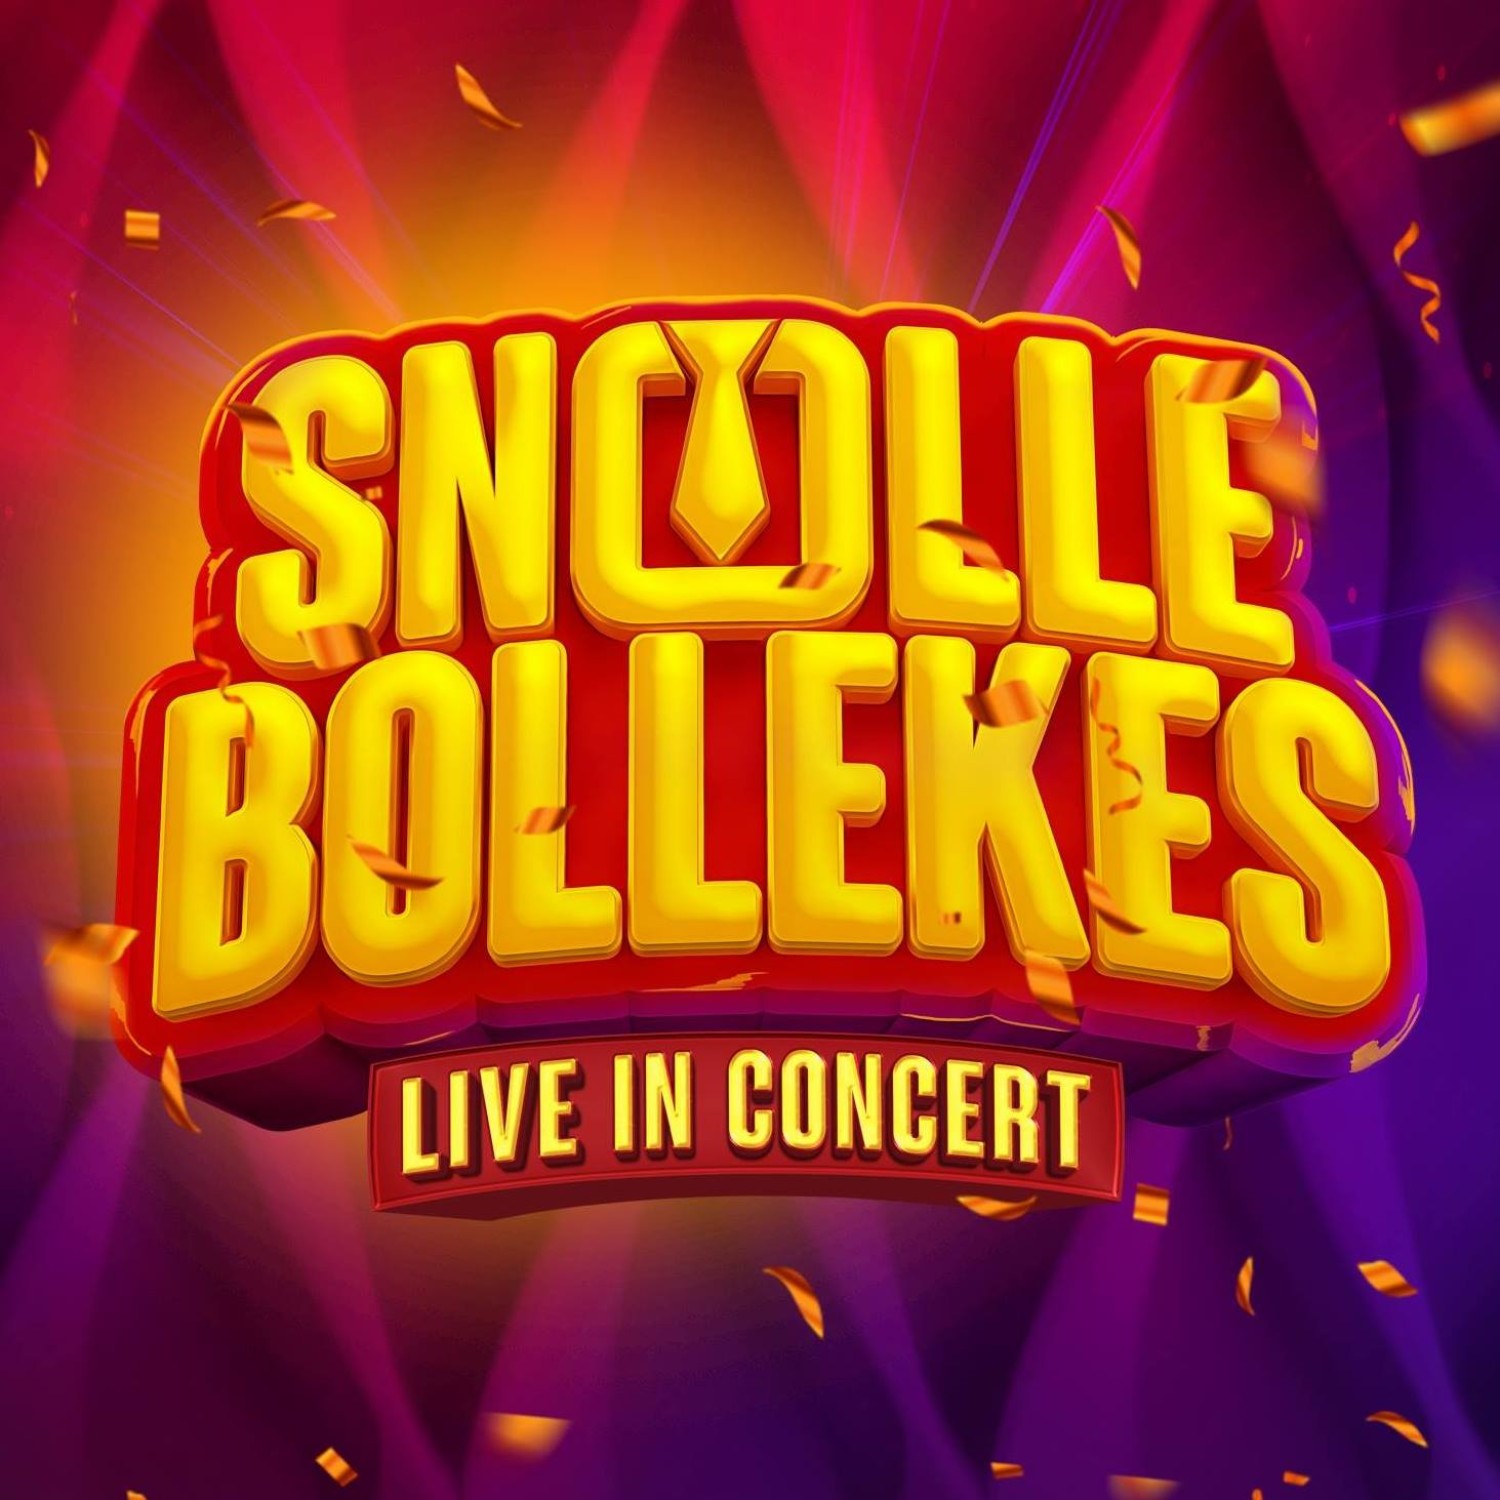 Snollebollekes Live in Concert